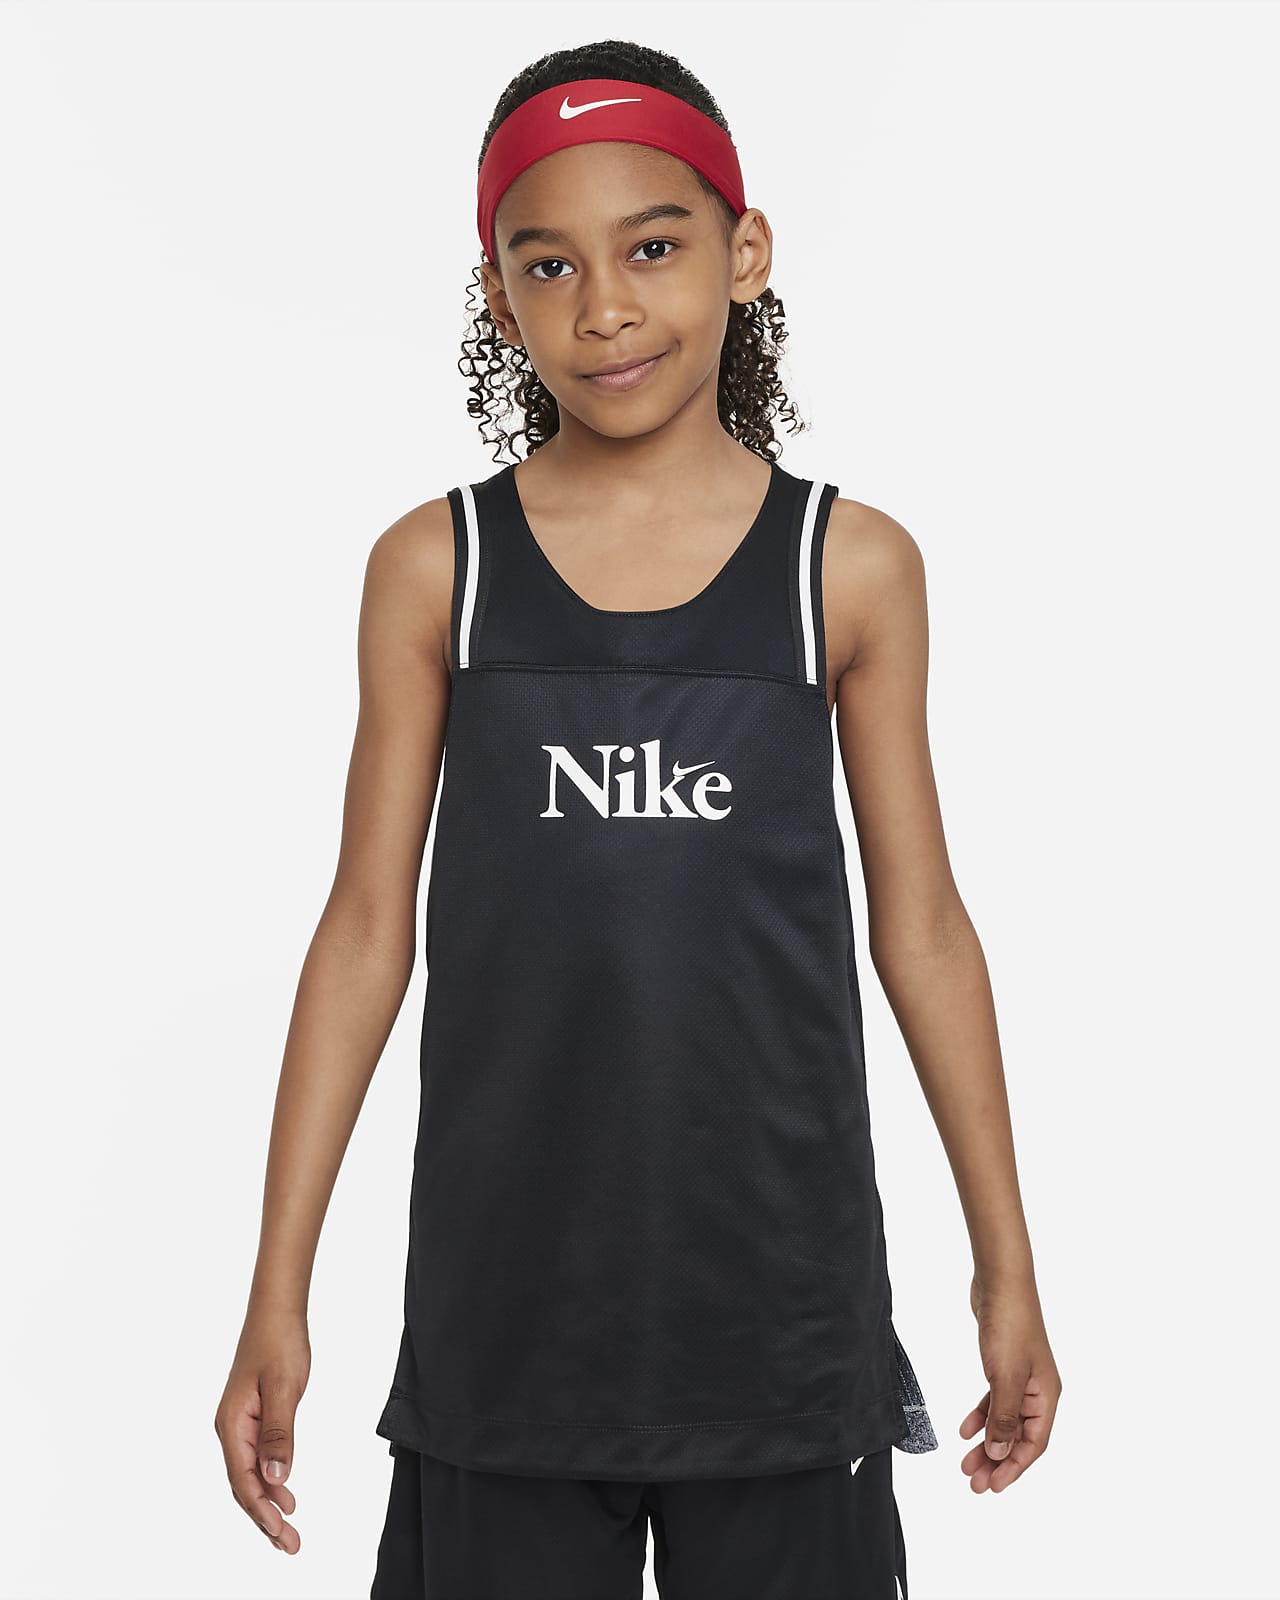 Nike Culture of Basketball Older Kids' Reversible Basketball Jersey